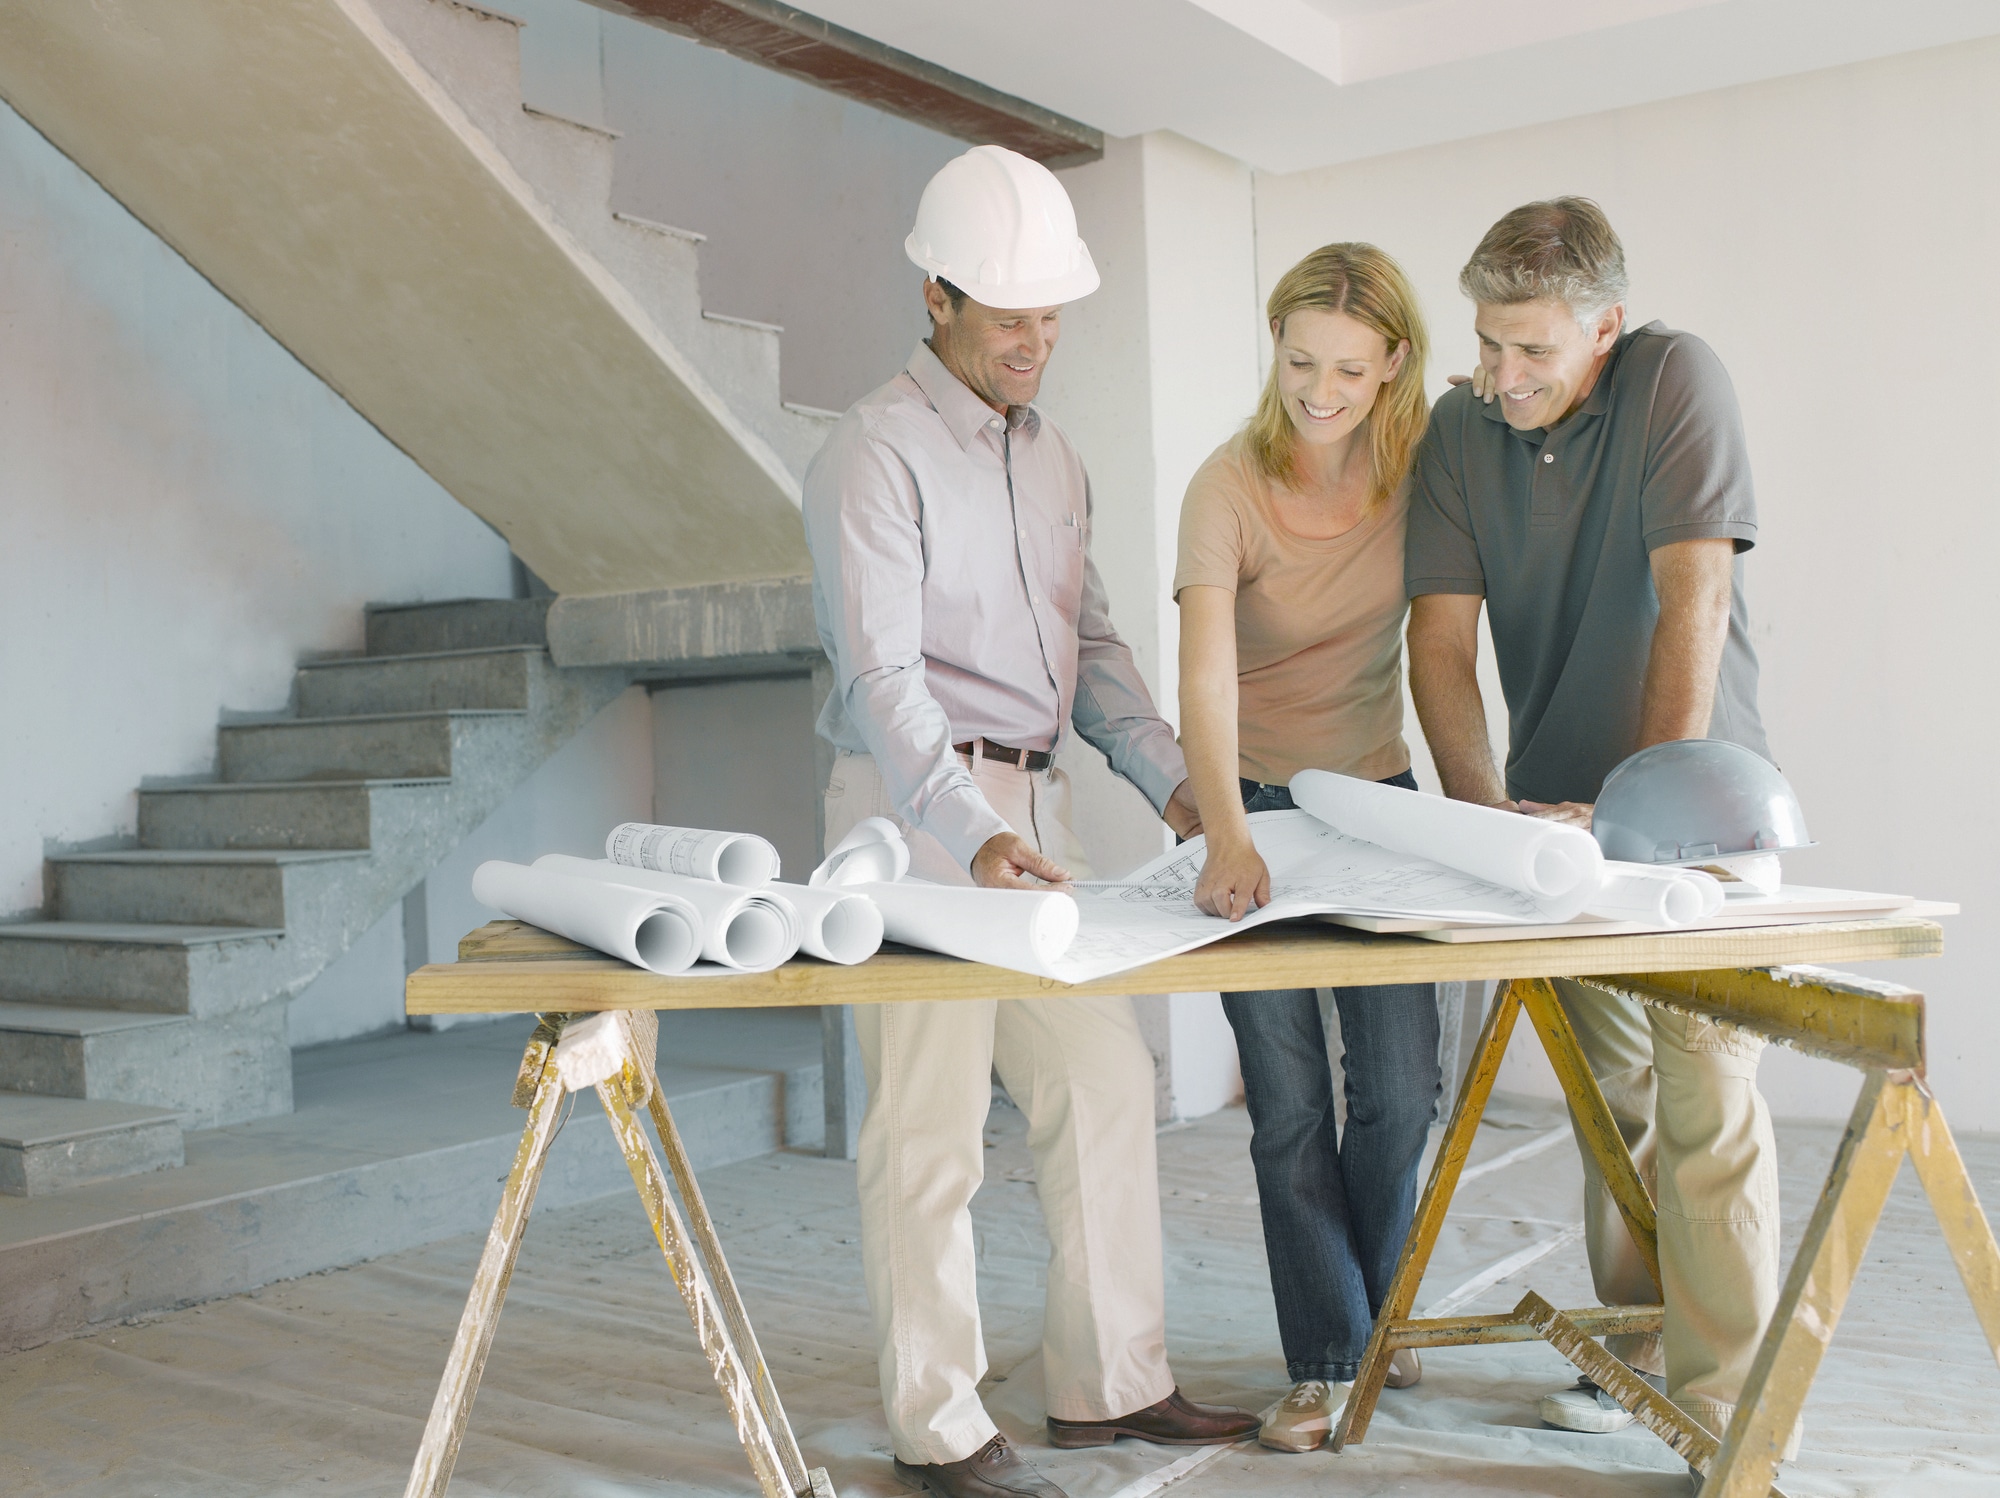 Construction foreman explaining blueprints to couple